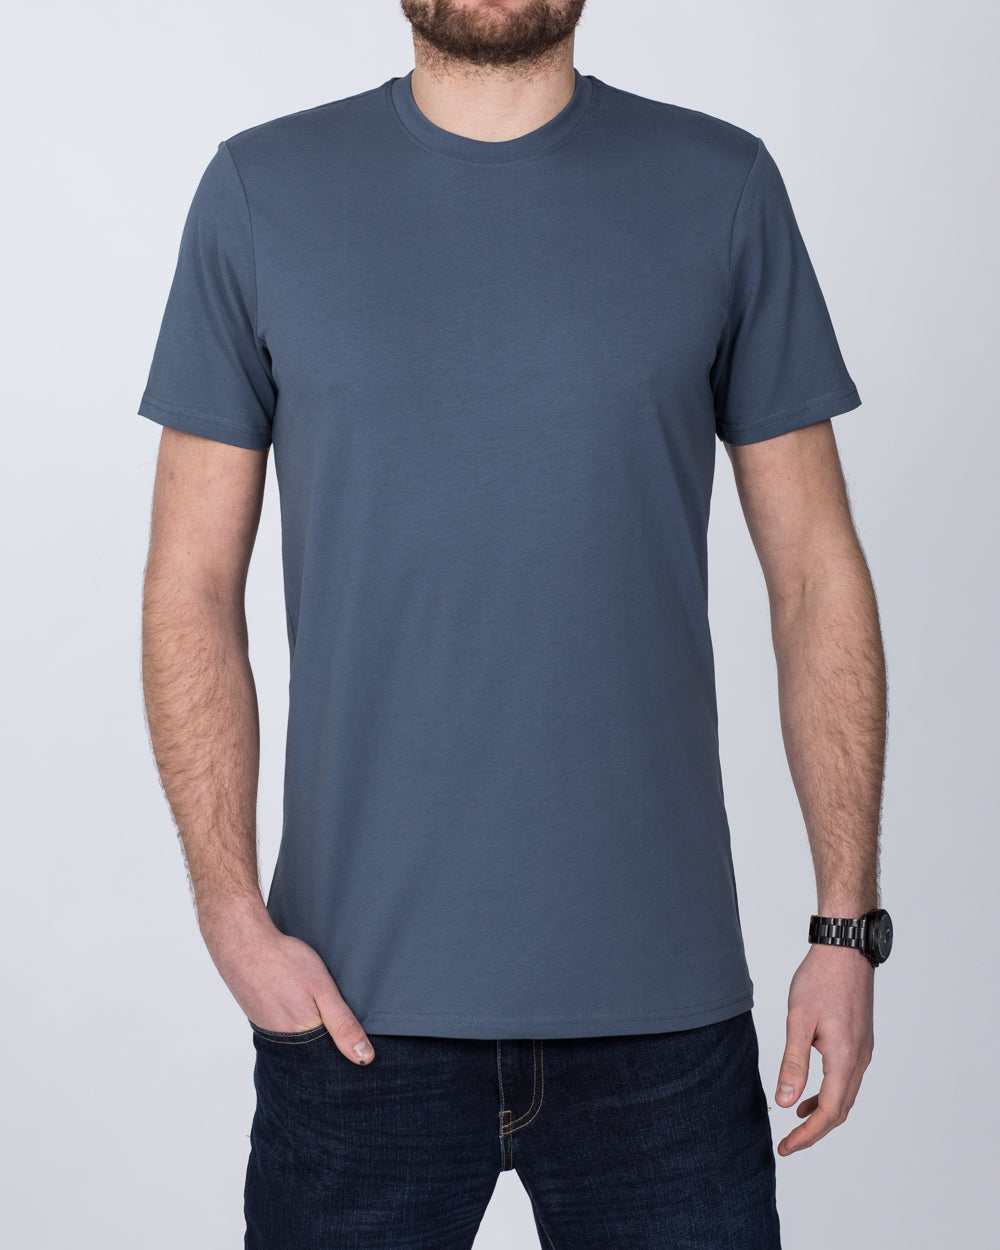 Girav Sydney Extra Tall T-Shirt (stone blue)